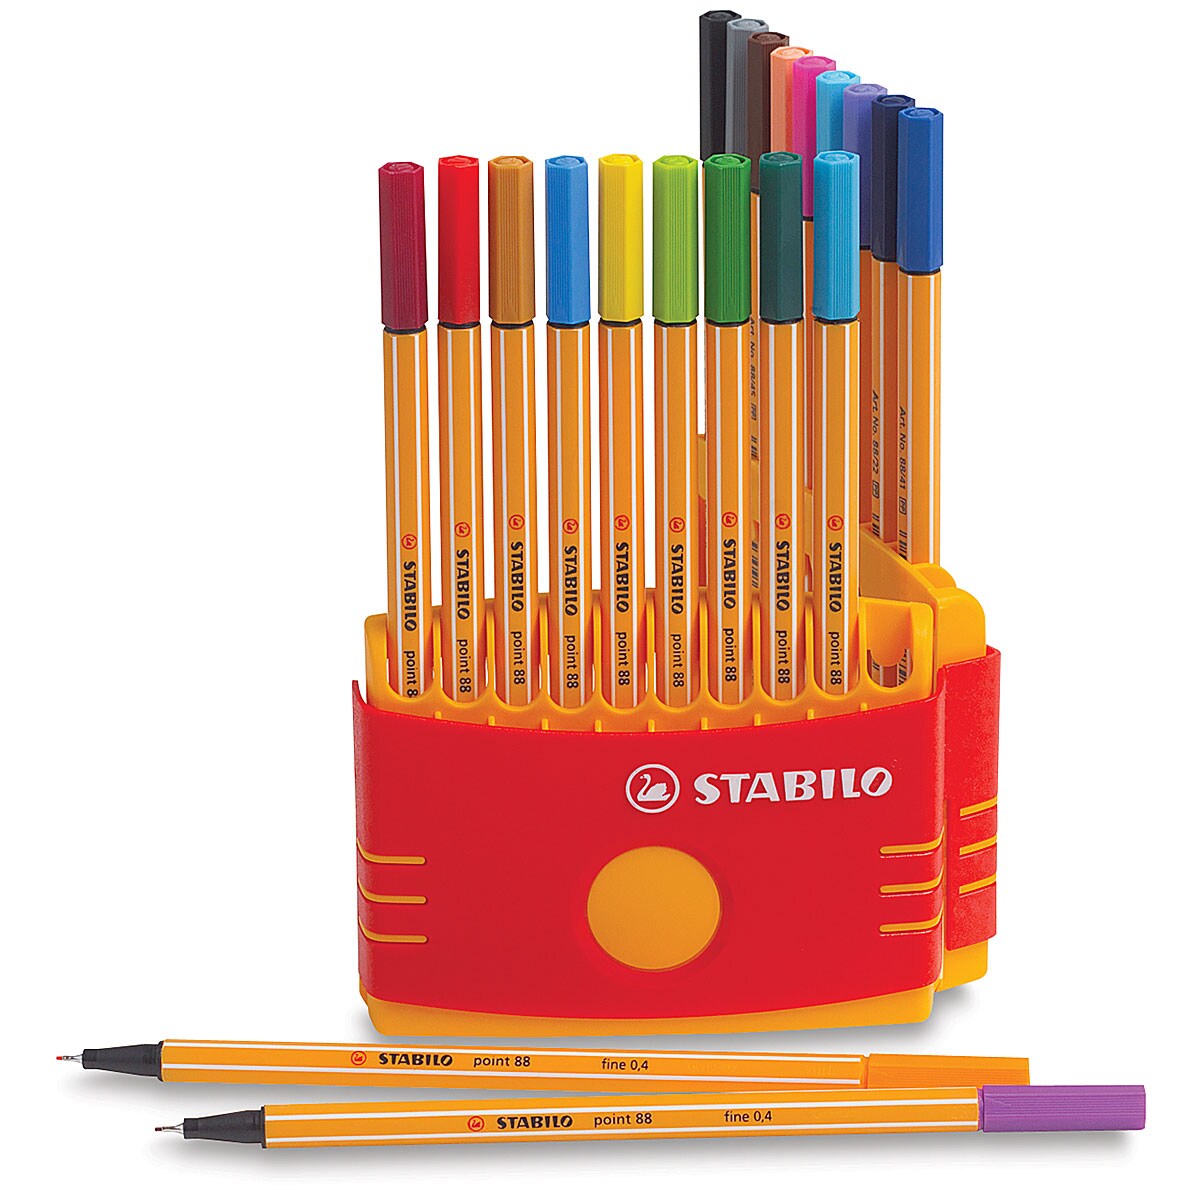 Stabilo Point 88 Fineliner Pen Set - Color Parade, Set of 20